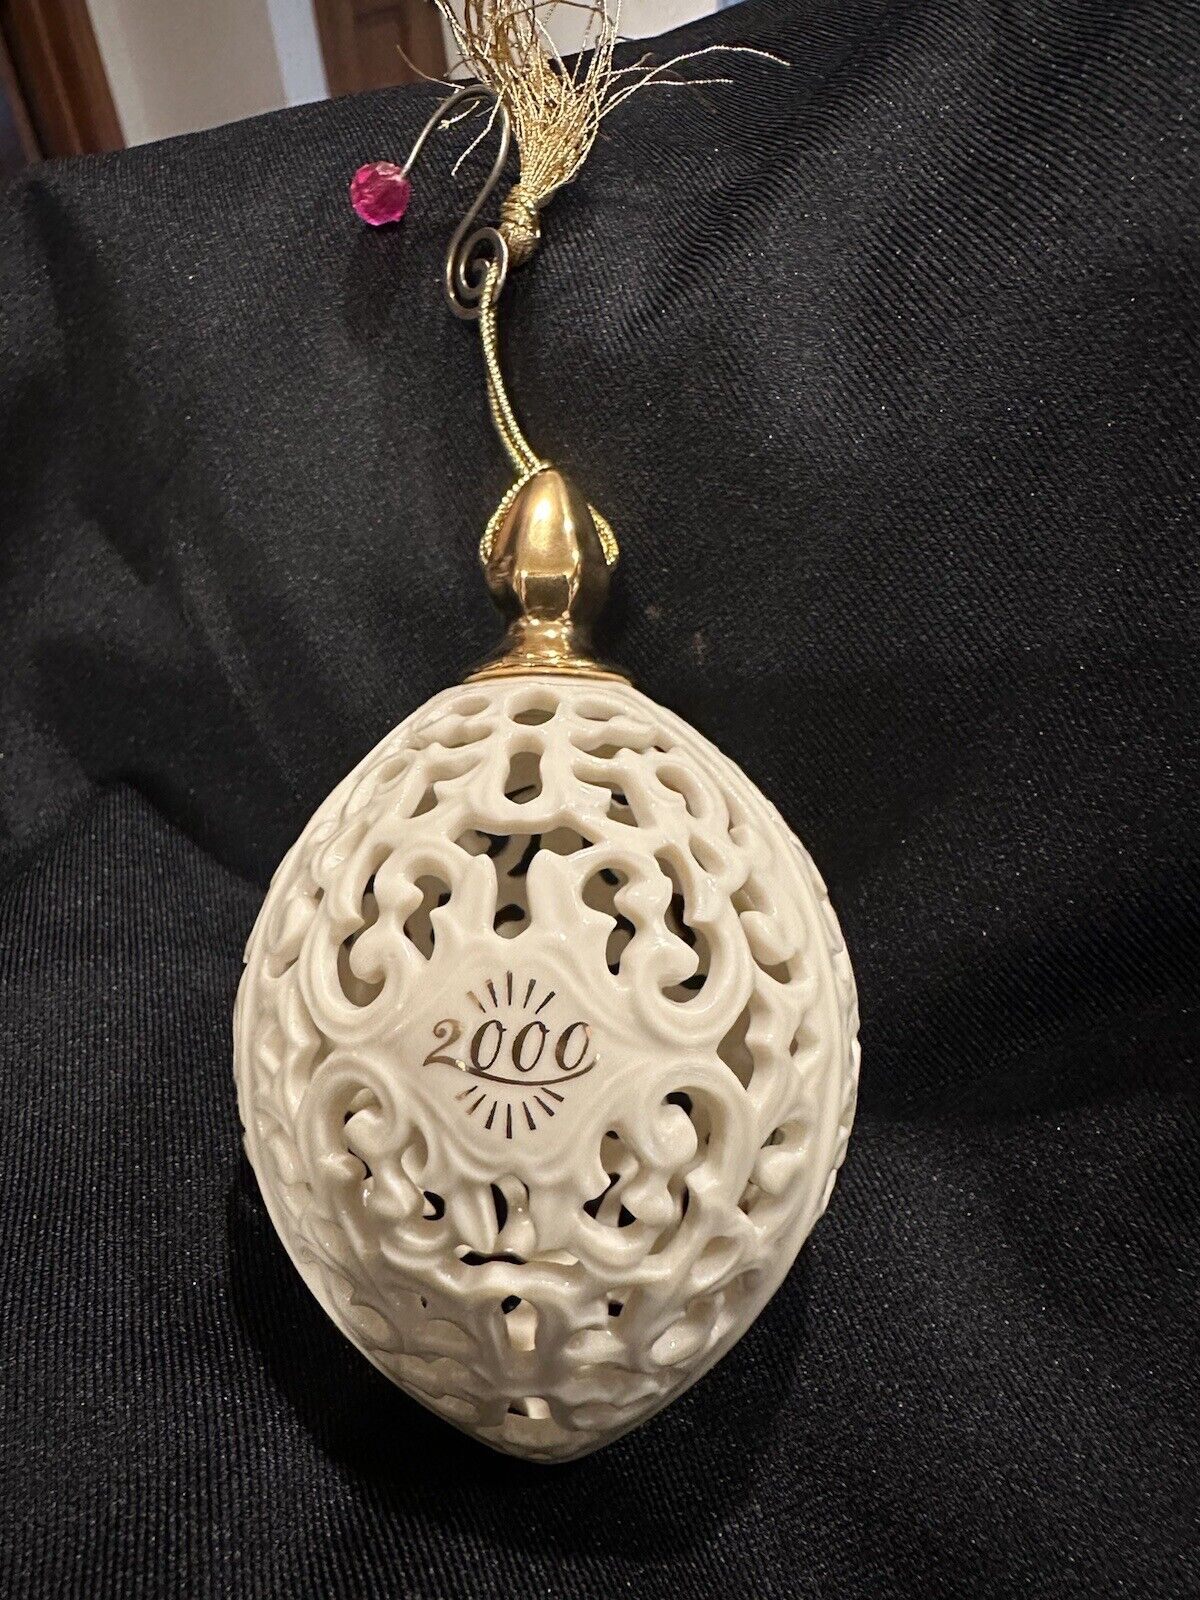 Lenox China 2000 Filigree Oval Ball Ornament